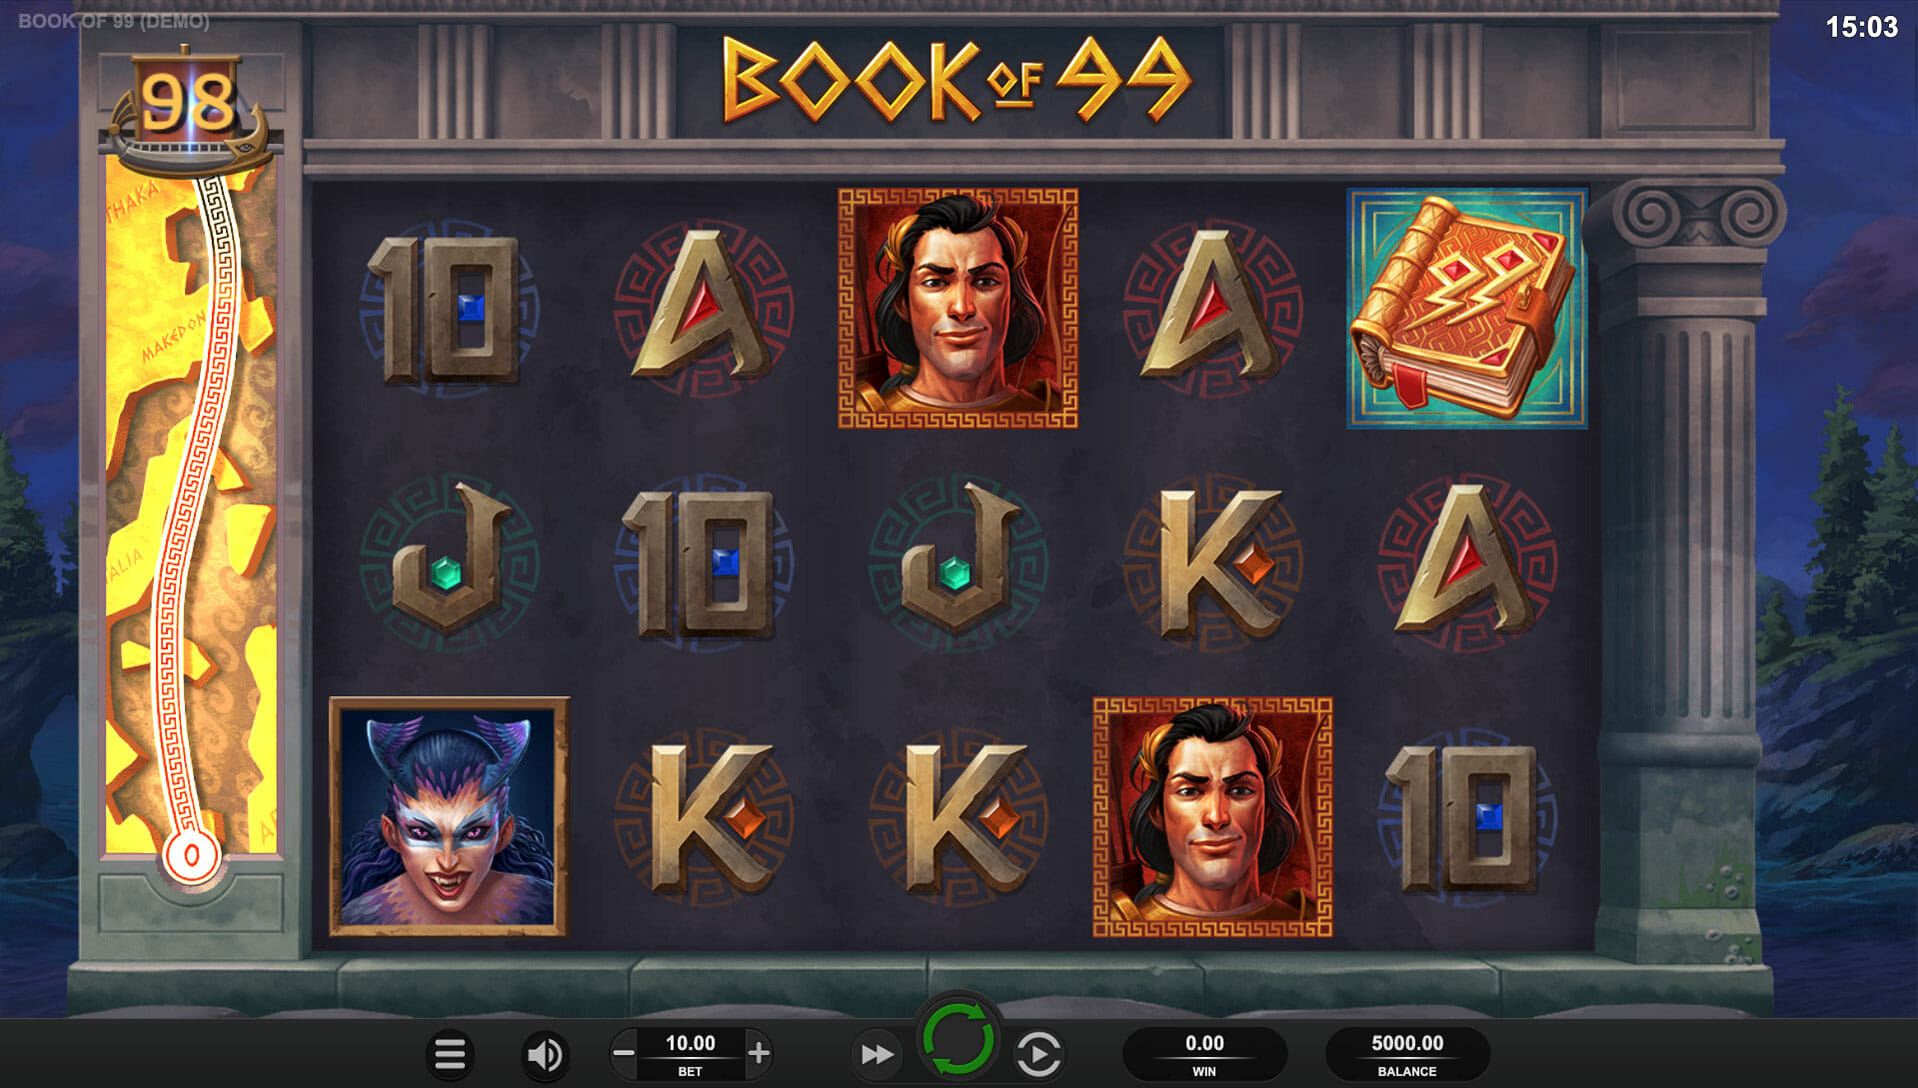 Book-of-99-gameplay